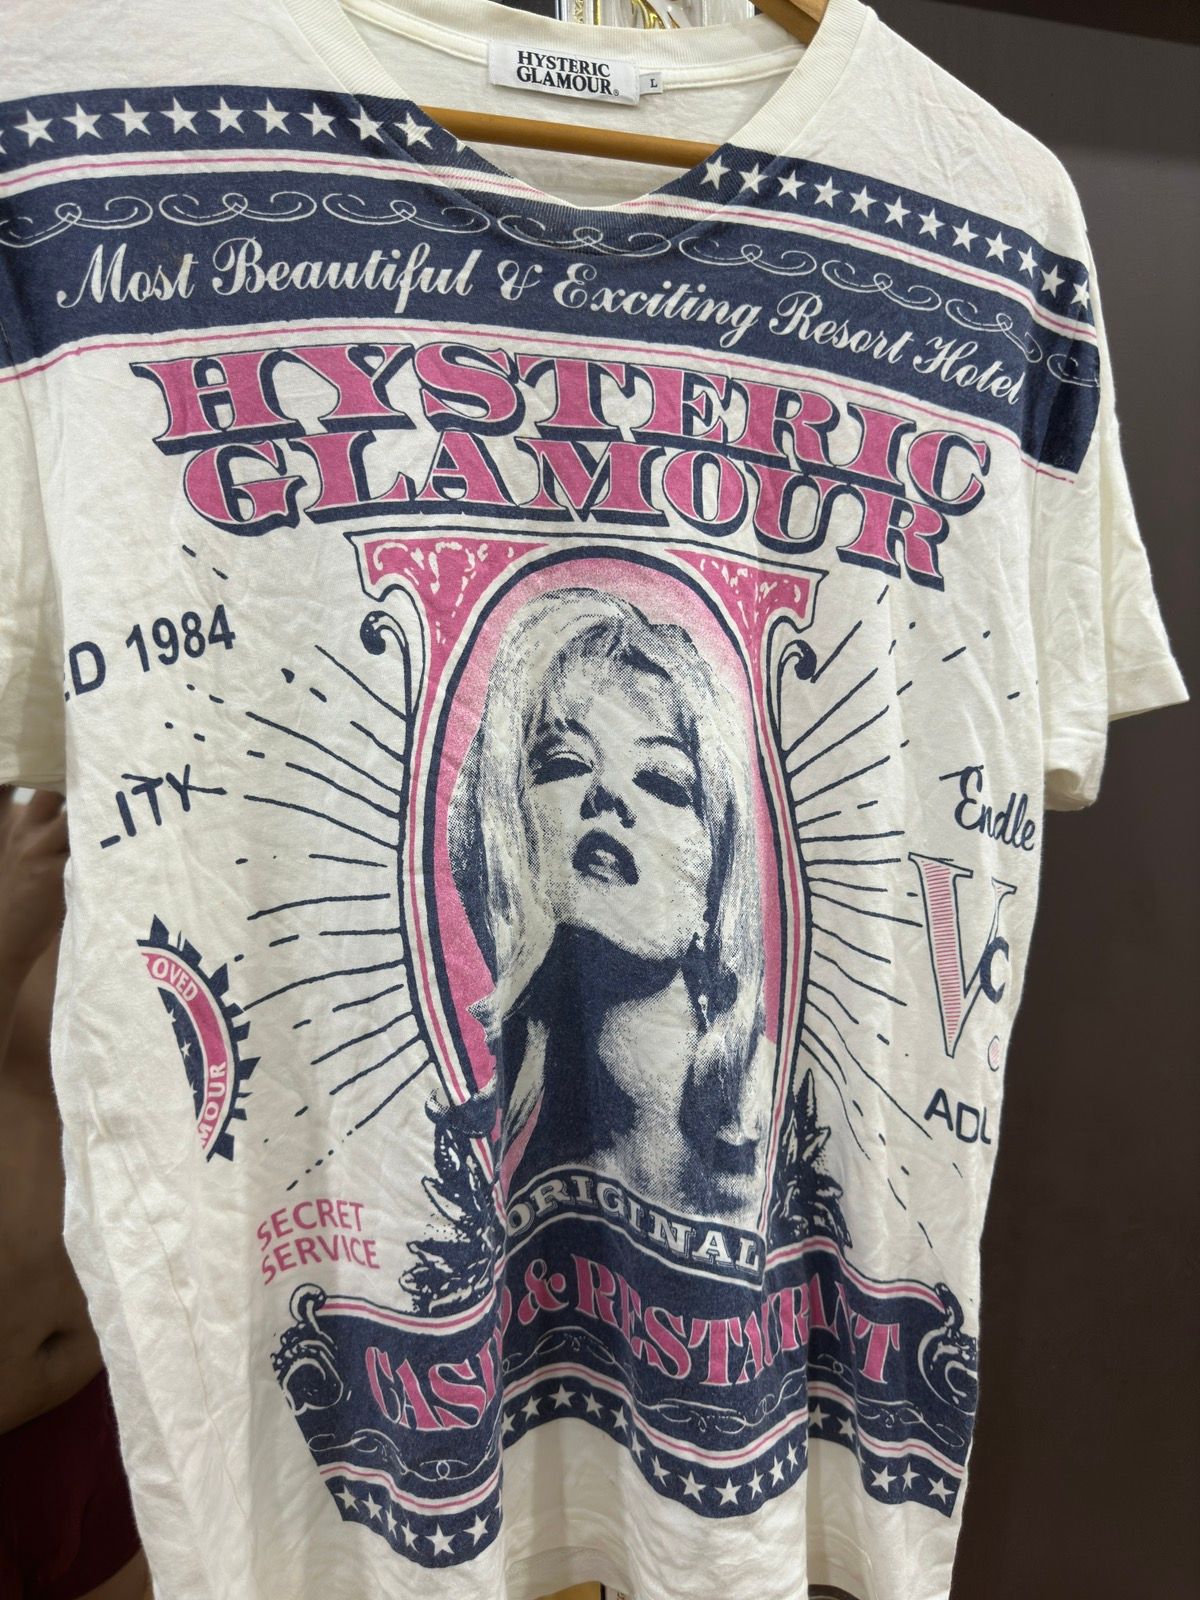 Hysteric Glamour Secret Service Girl Full Print Tshirt - 10